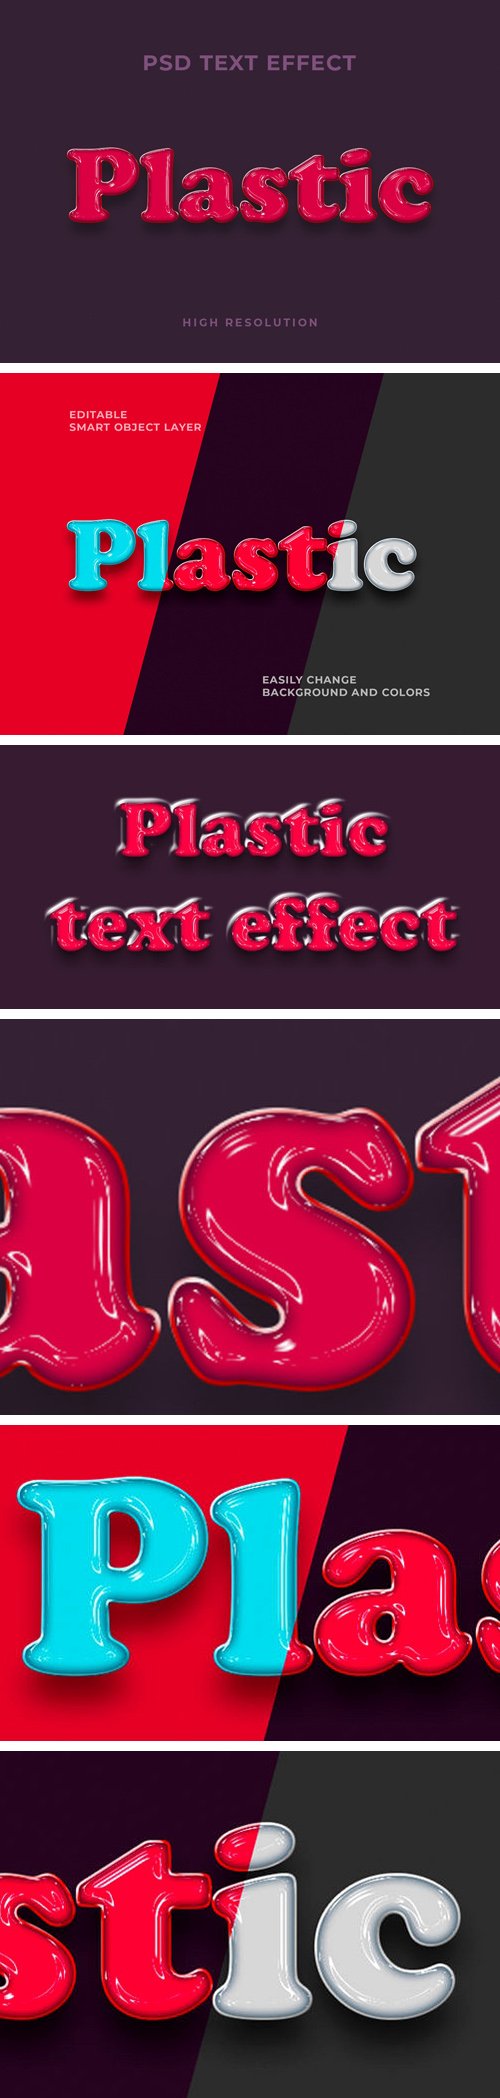 Plastic PSD Text Effect